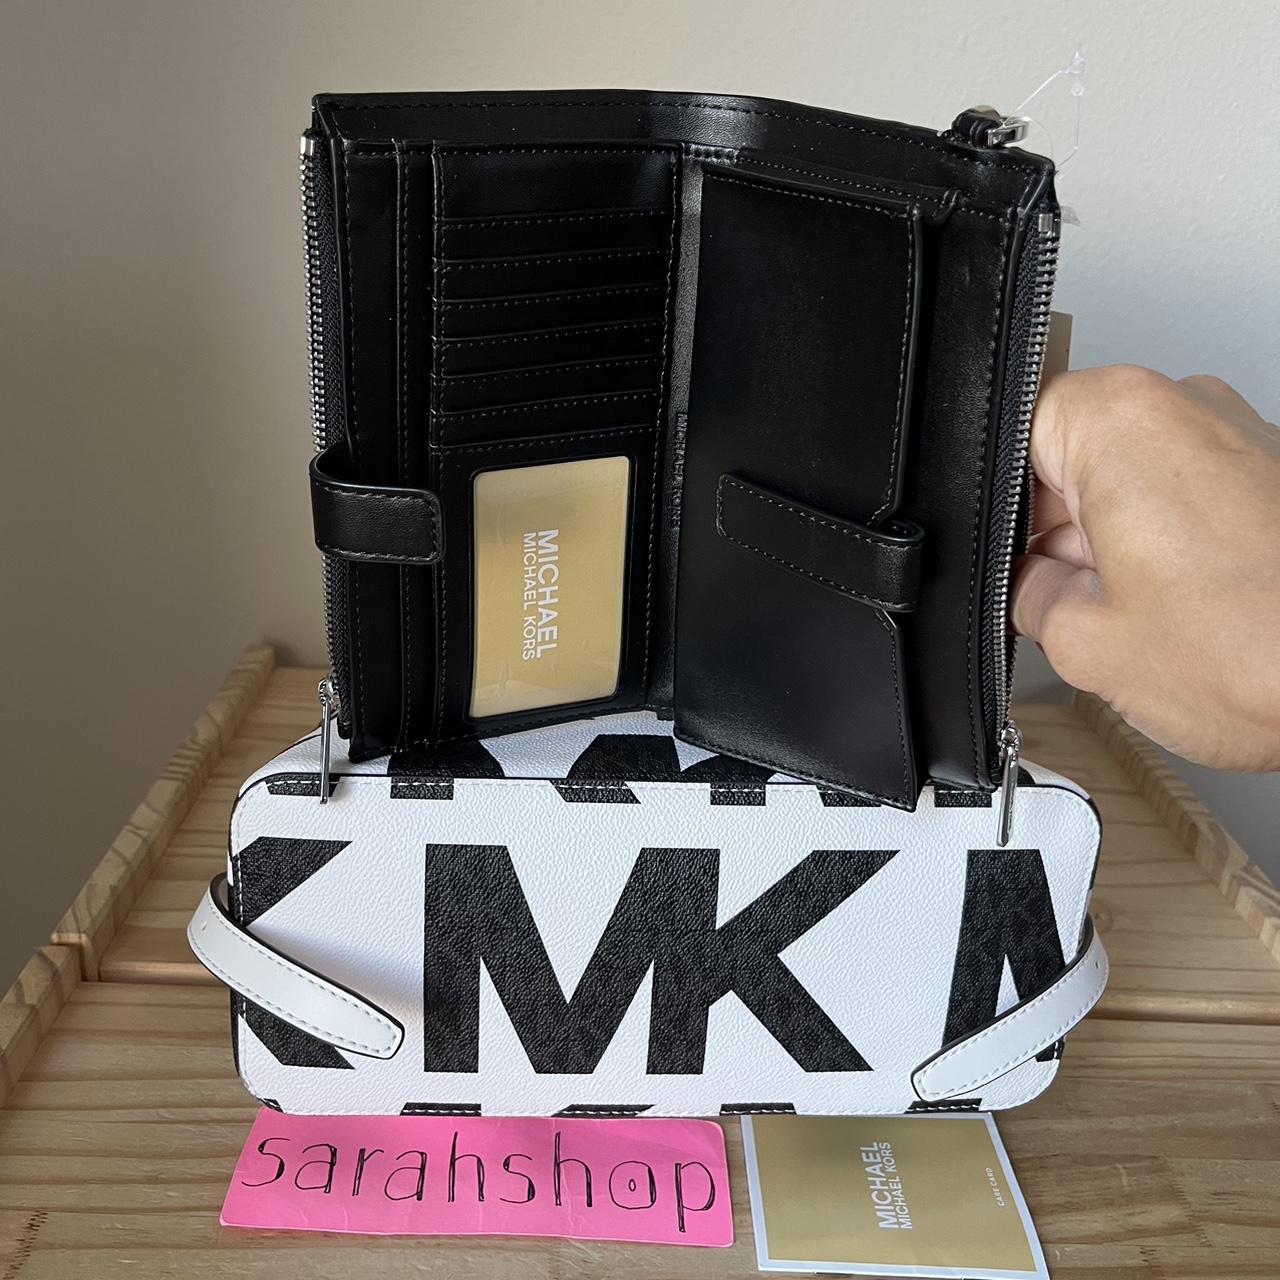 Michael Kors backpack Men Set 100% Authentic MK - Depop